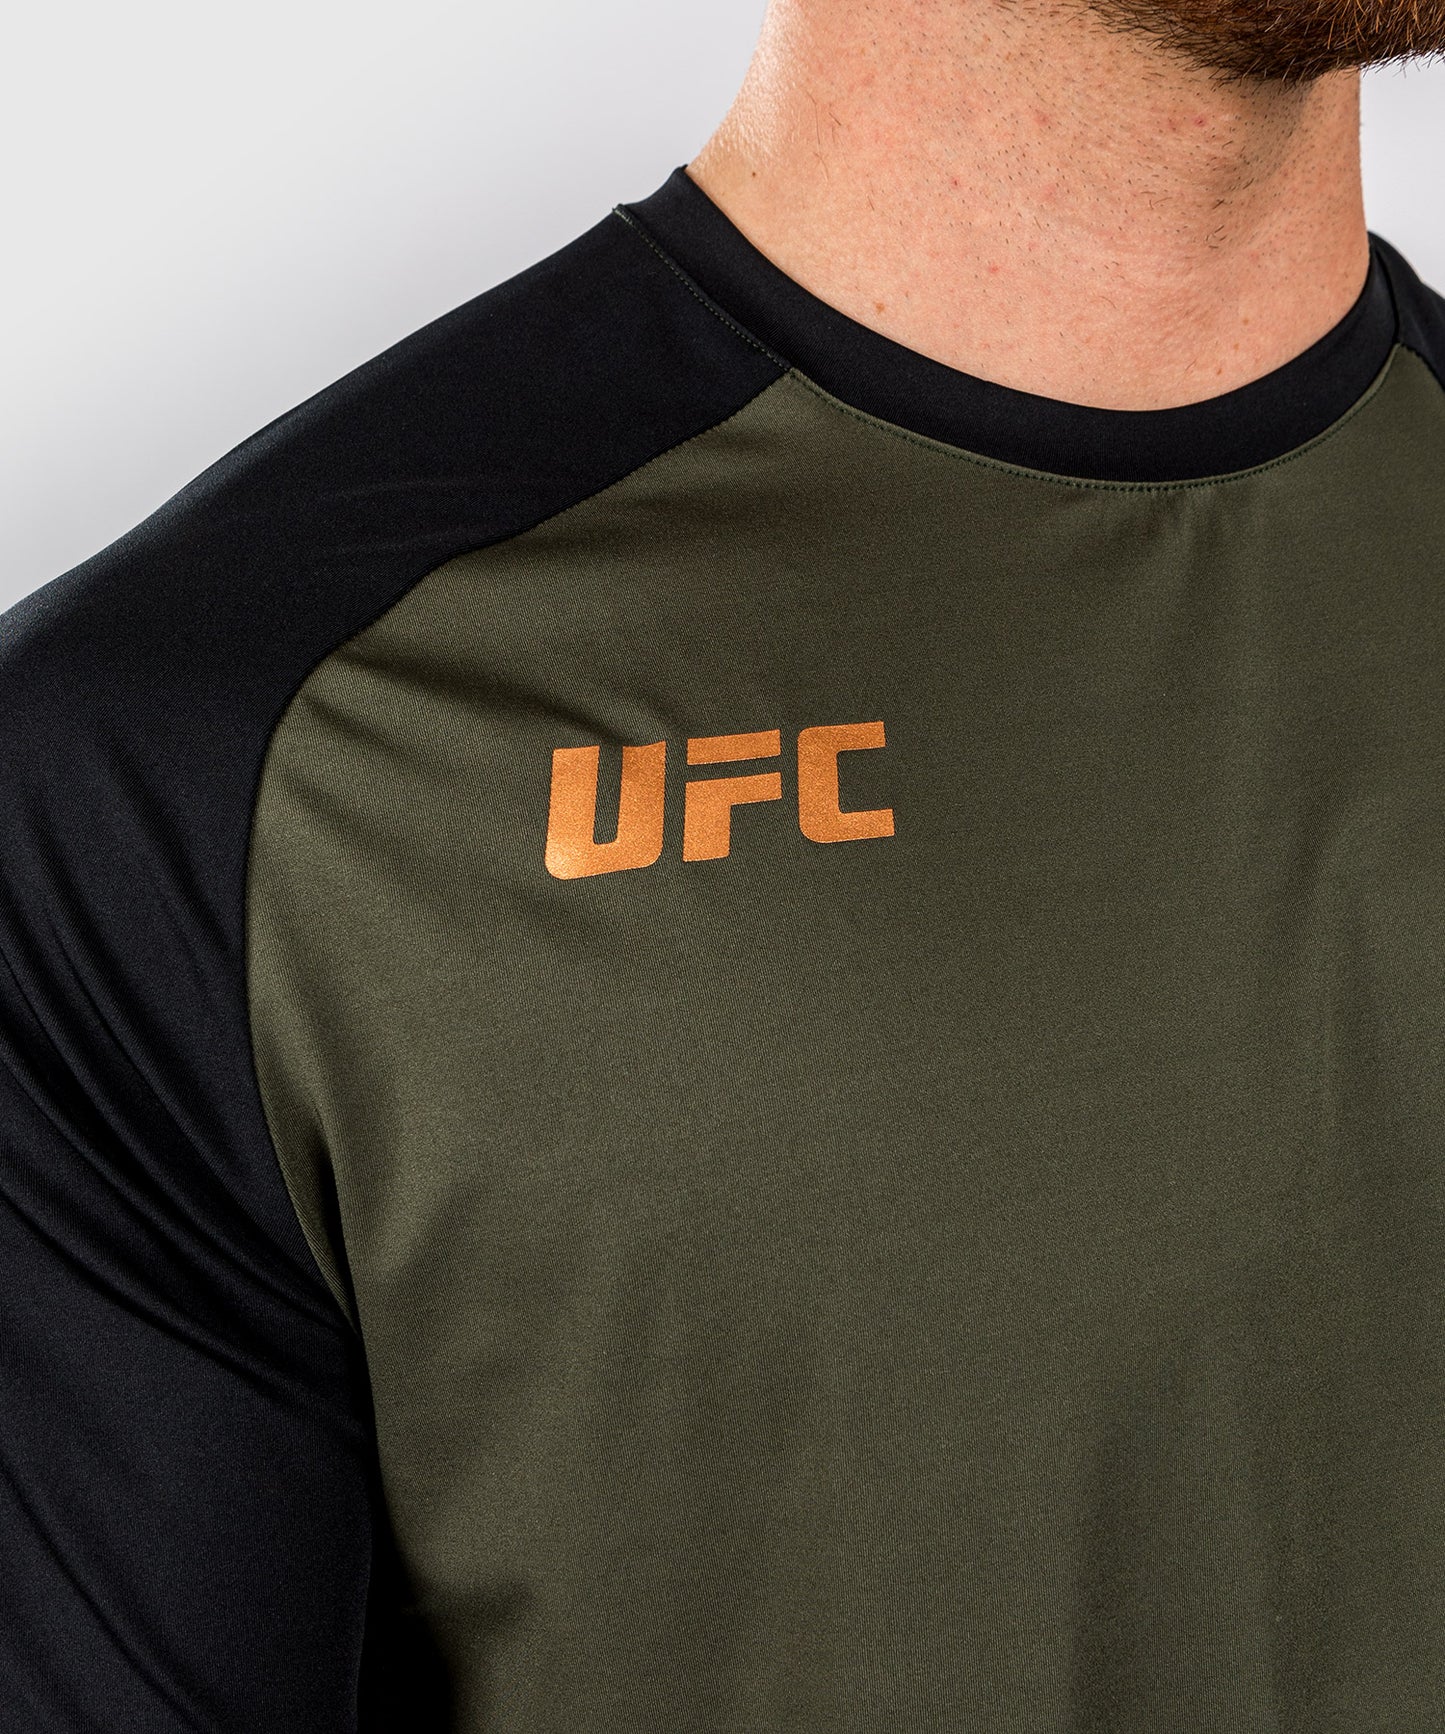 UFC Adrenaline by Venum Fight Week Camiseta Dry-tech para Hombre - Caqui/Bronce